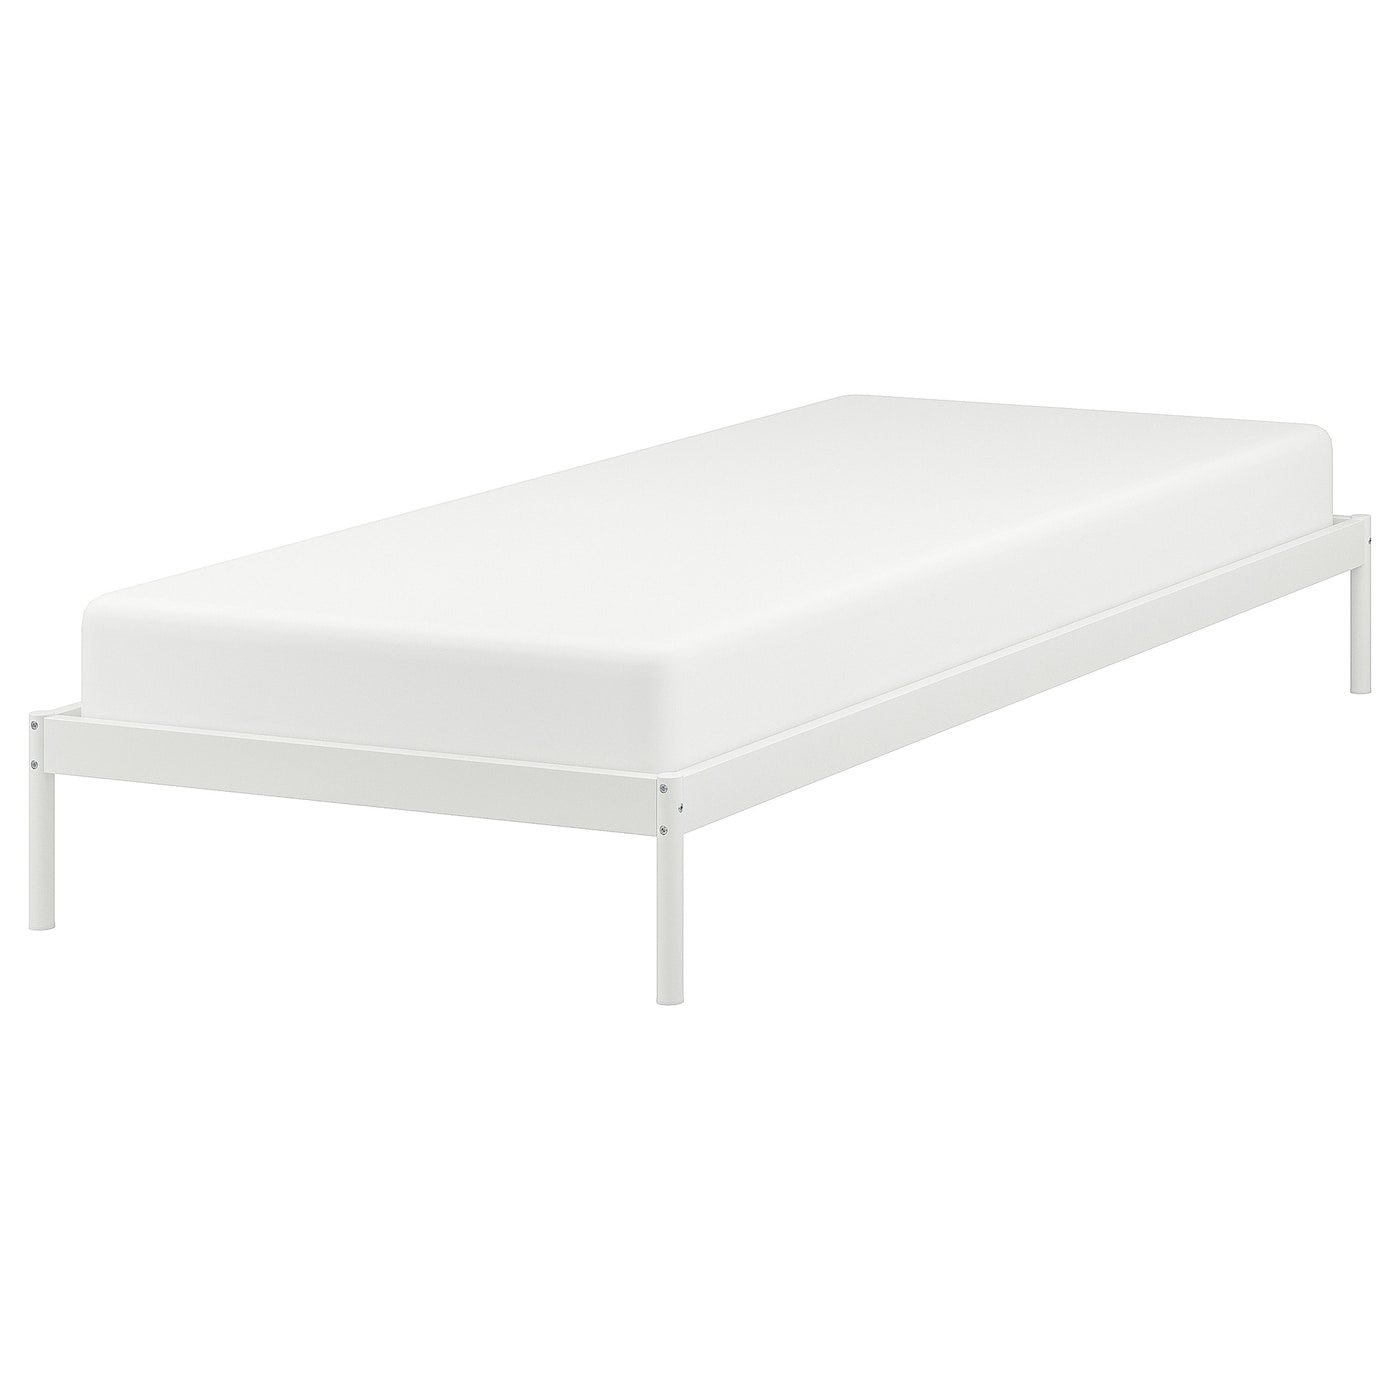 Каркас кровати - IKEA VEVELSTAD, 200х90 см, белый, ВЕВЕЛСТАД ИКЕА